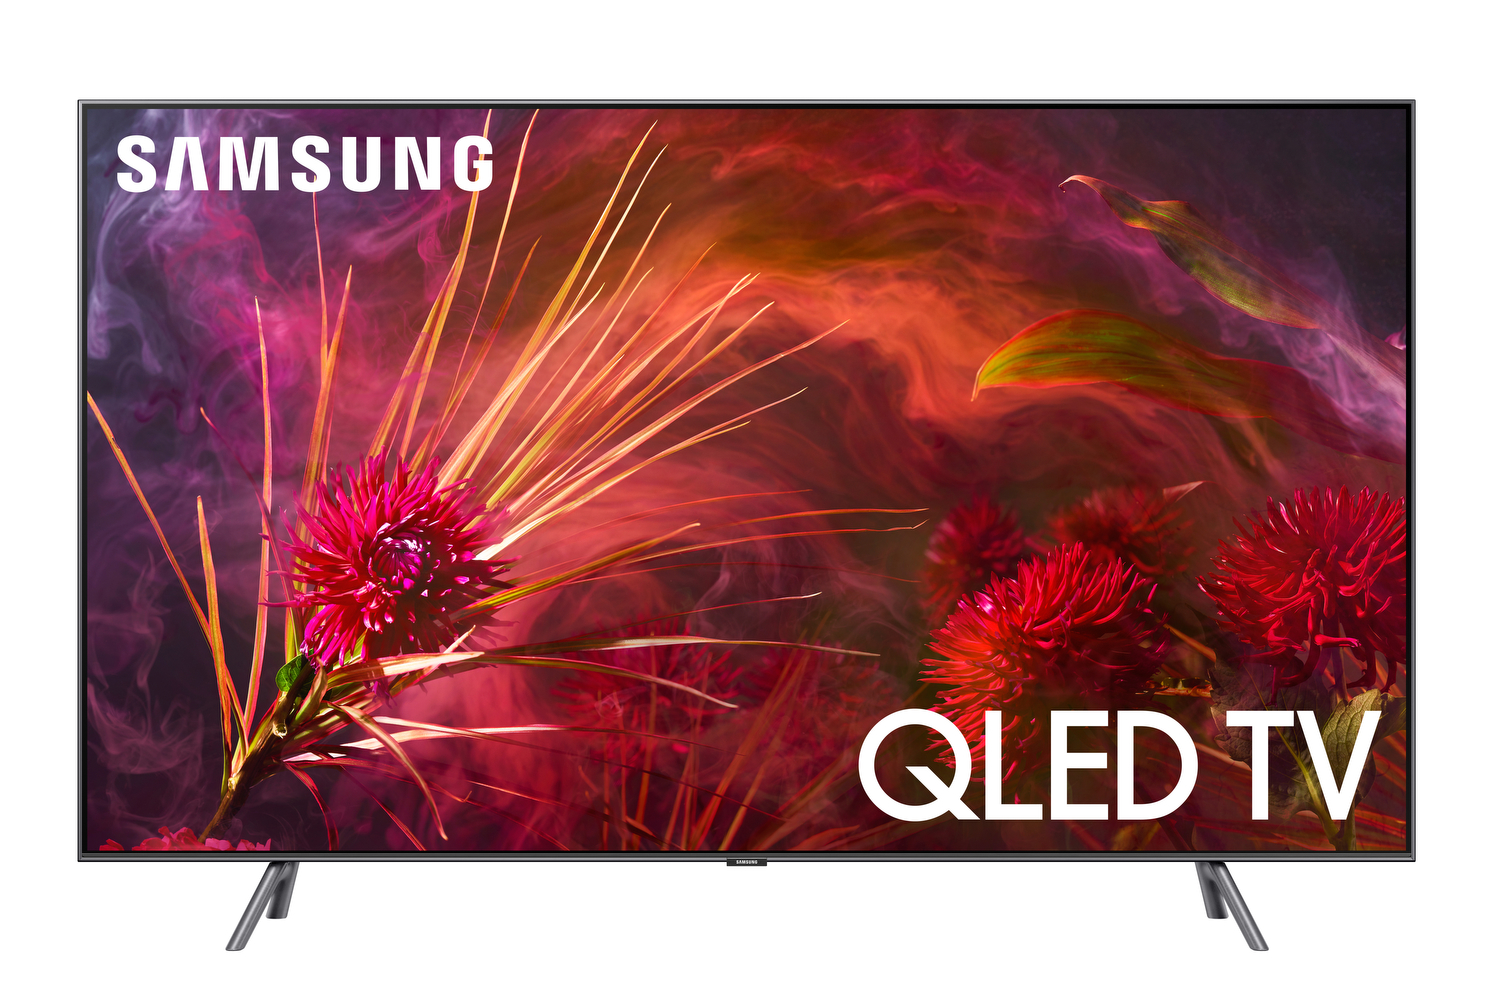 Samsung 2018 QLED TV Lineup | Q8FN Model